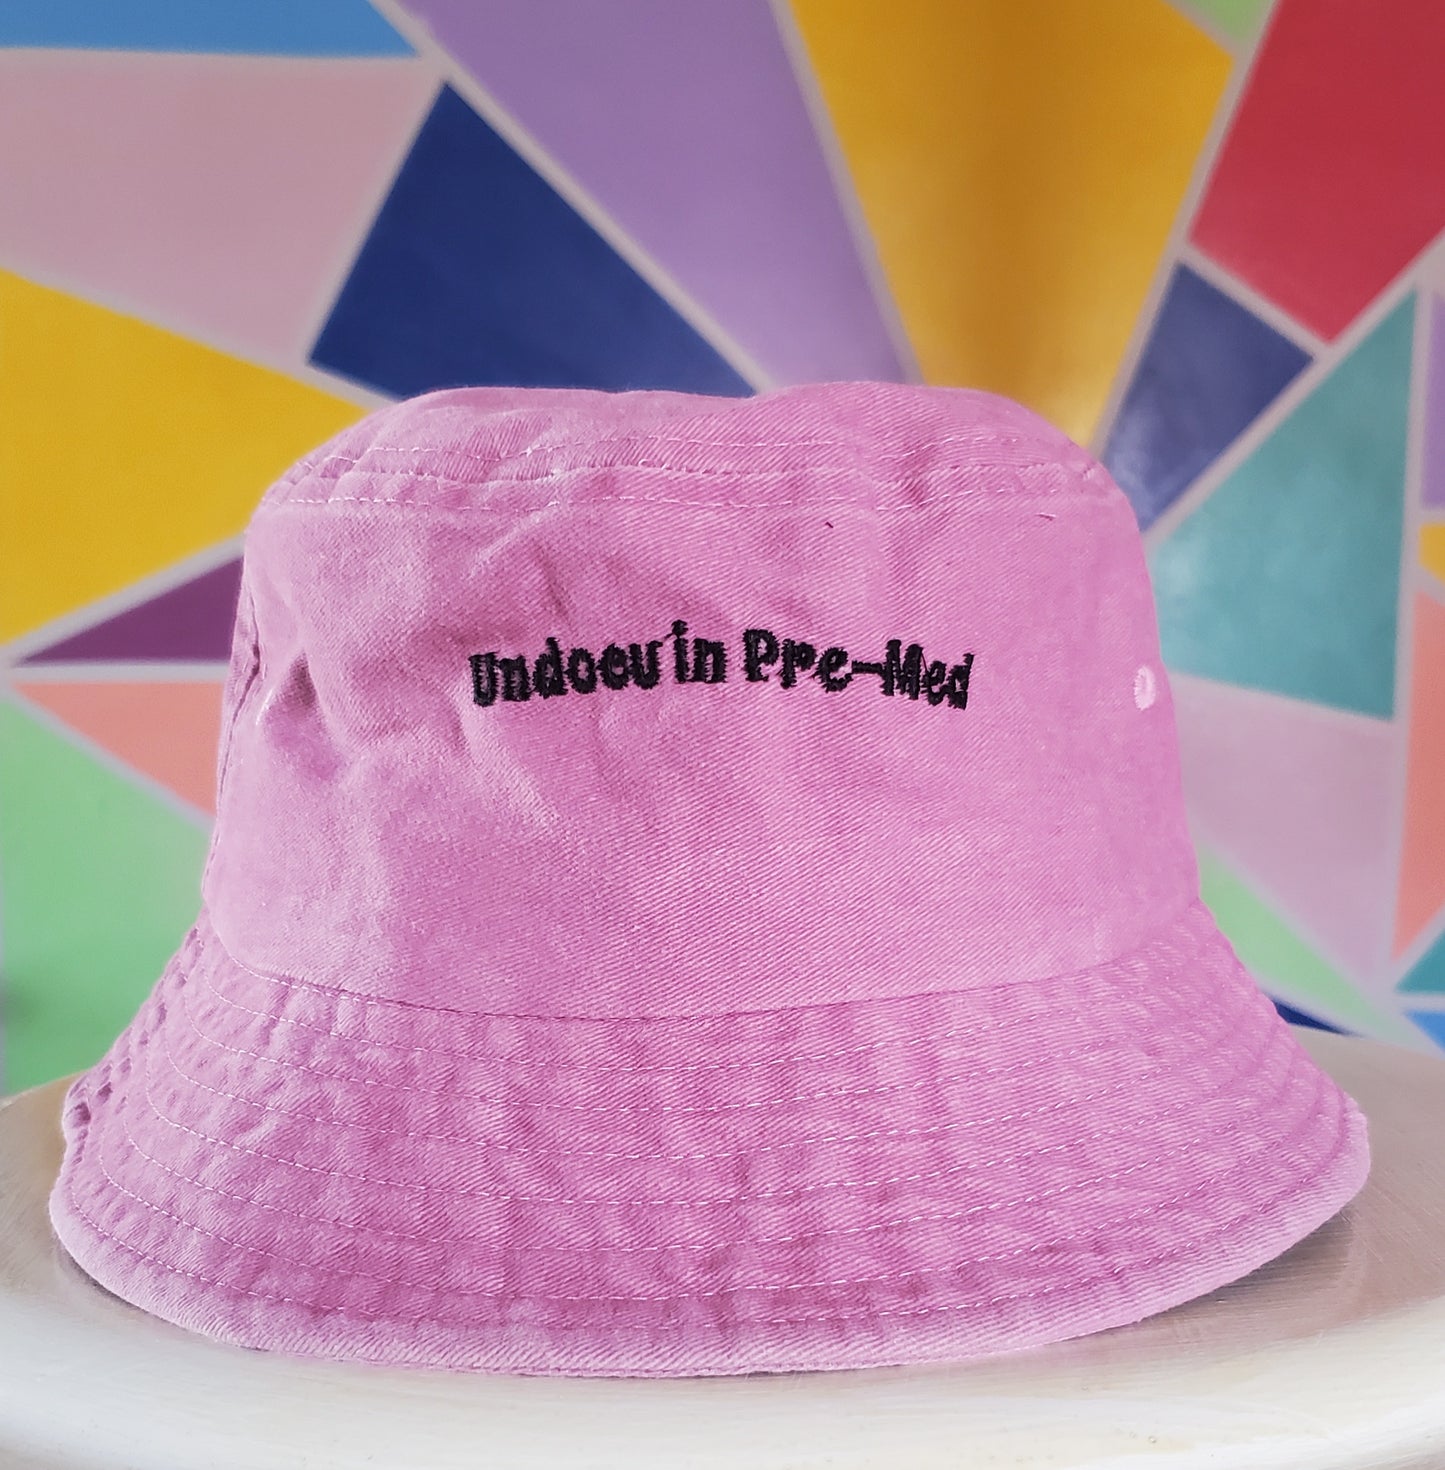 Undocu in Pre-Med Bucket Hat